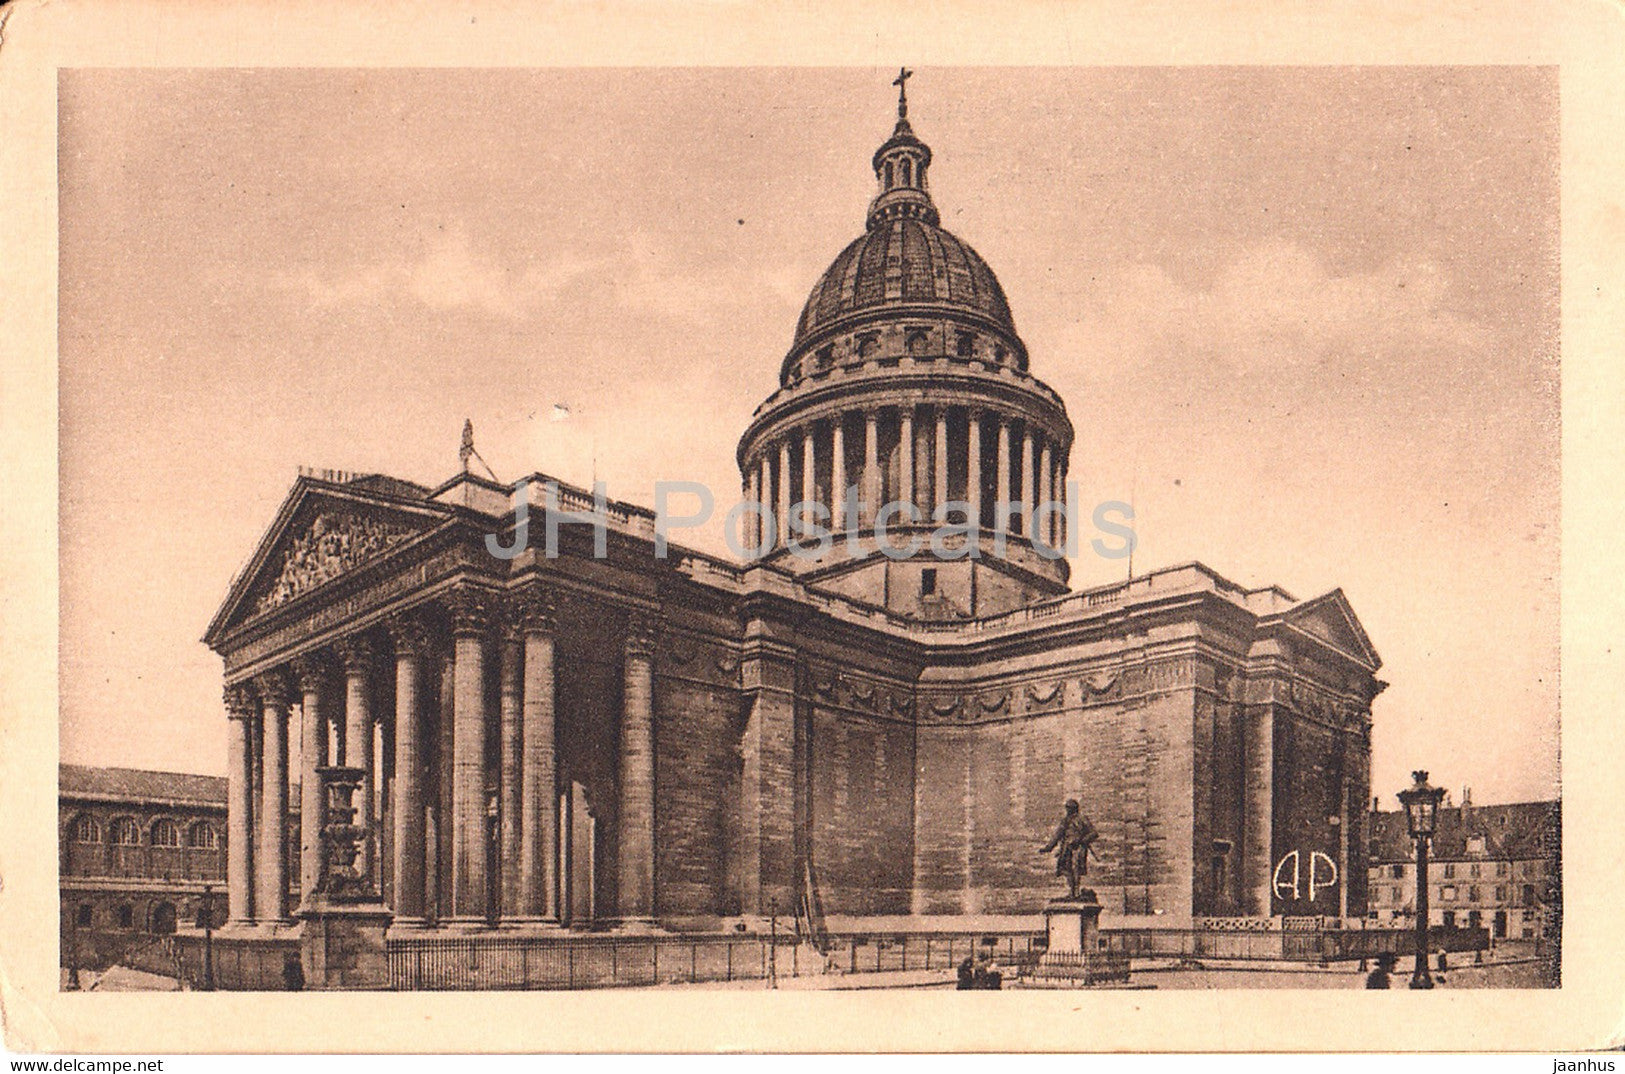 Paris - Le Pantheon - The Pantheon - 91 - old postcard - France - unused - JH Postcards